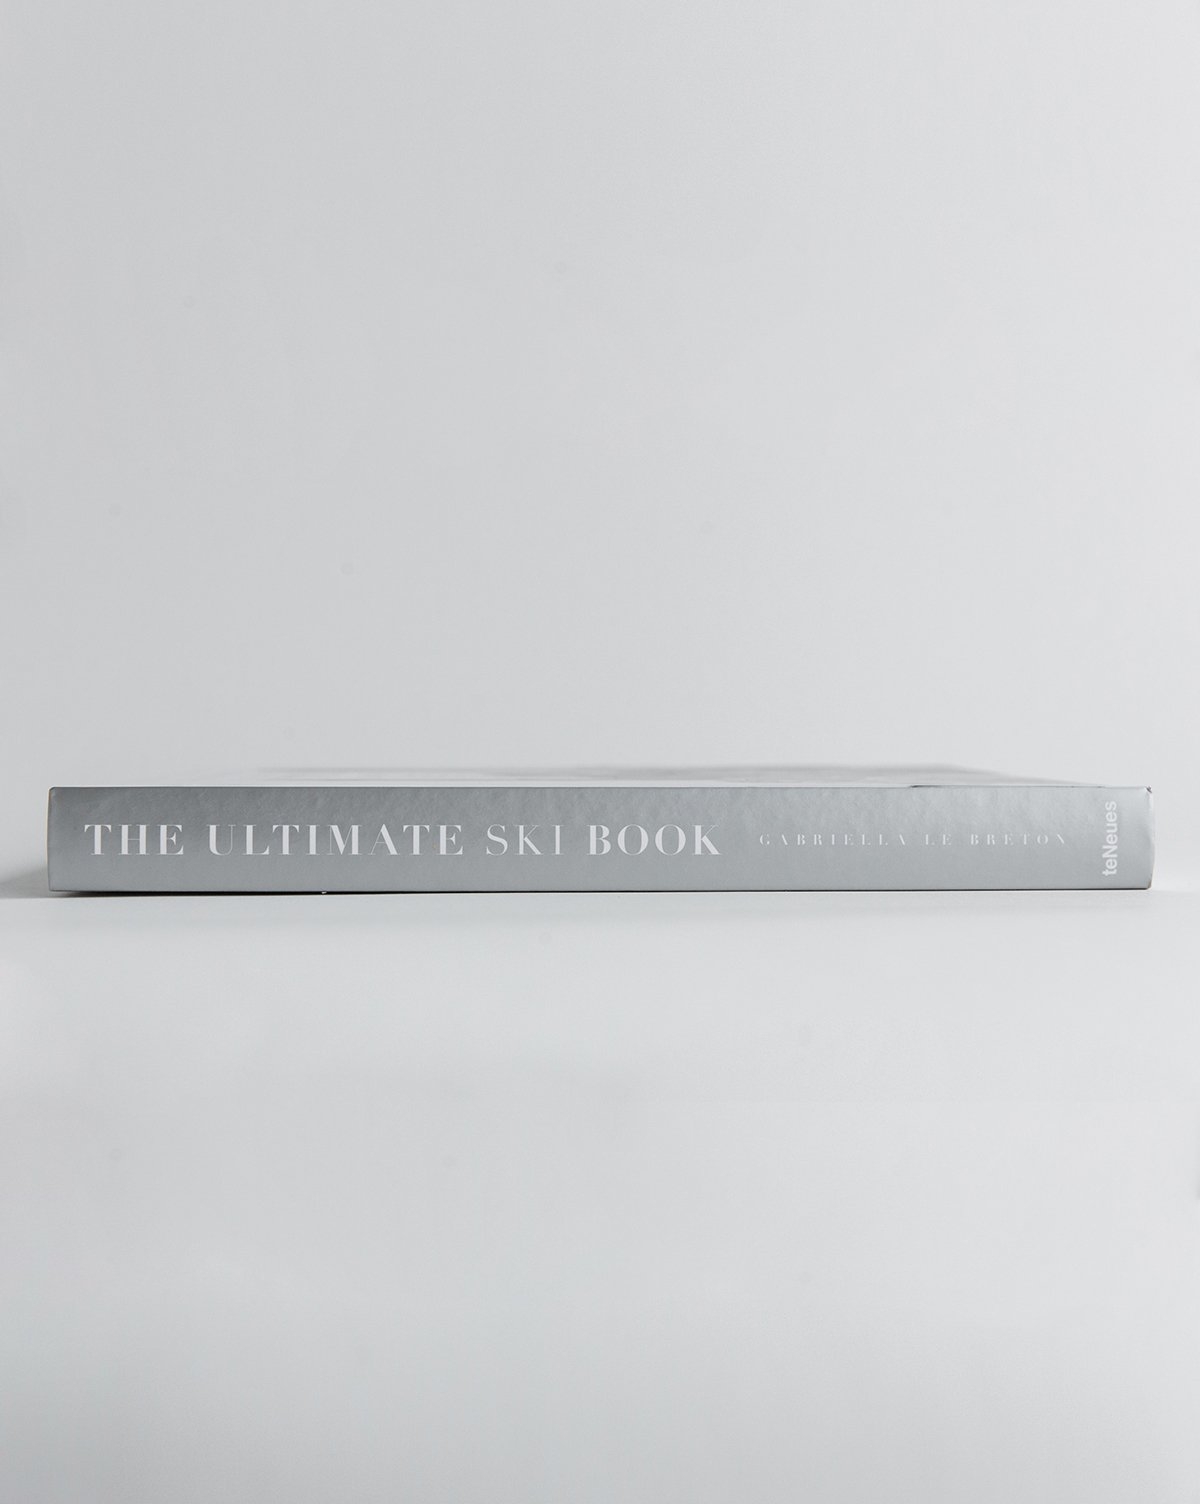 THE ULTIMATE SKI BOOK - Image 3